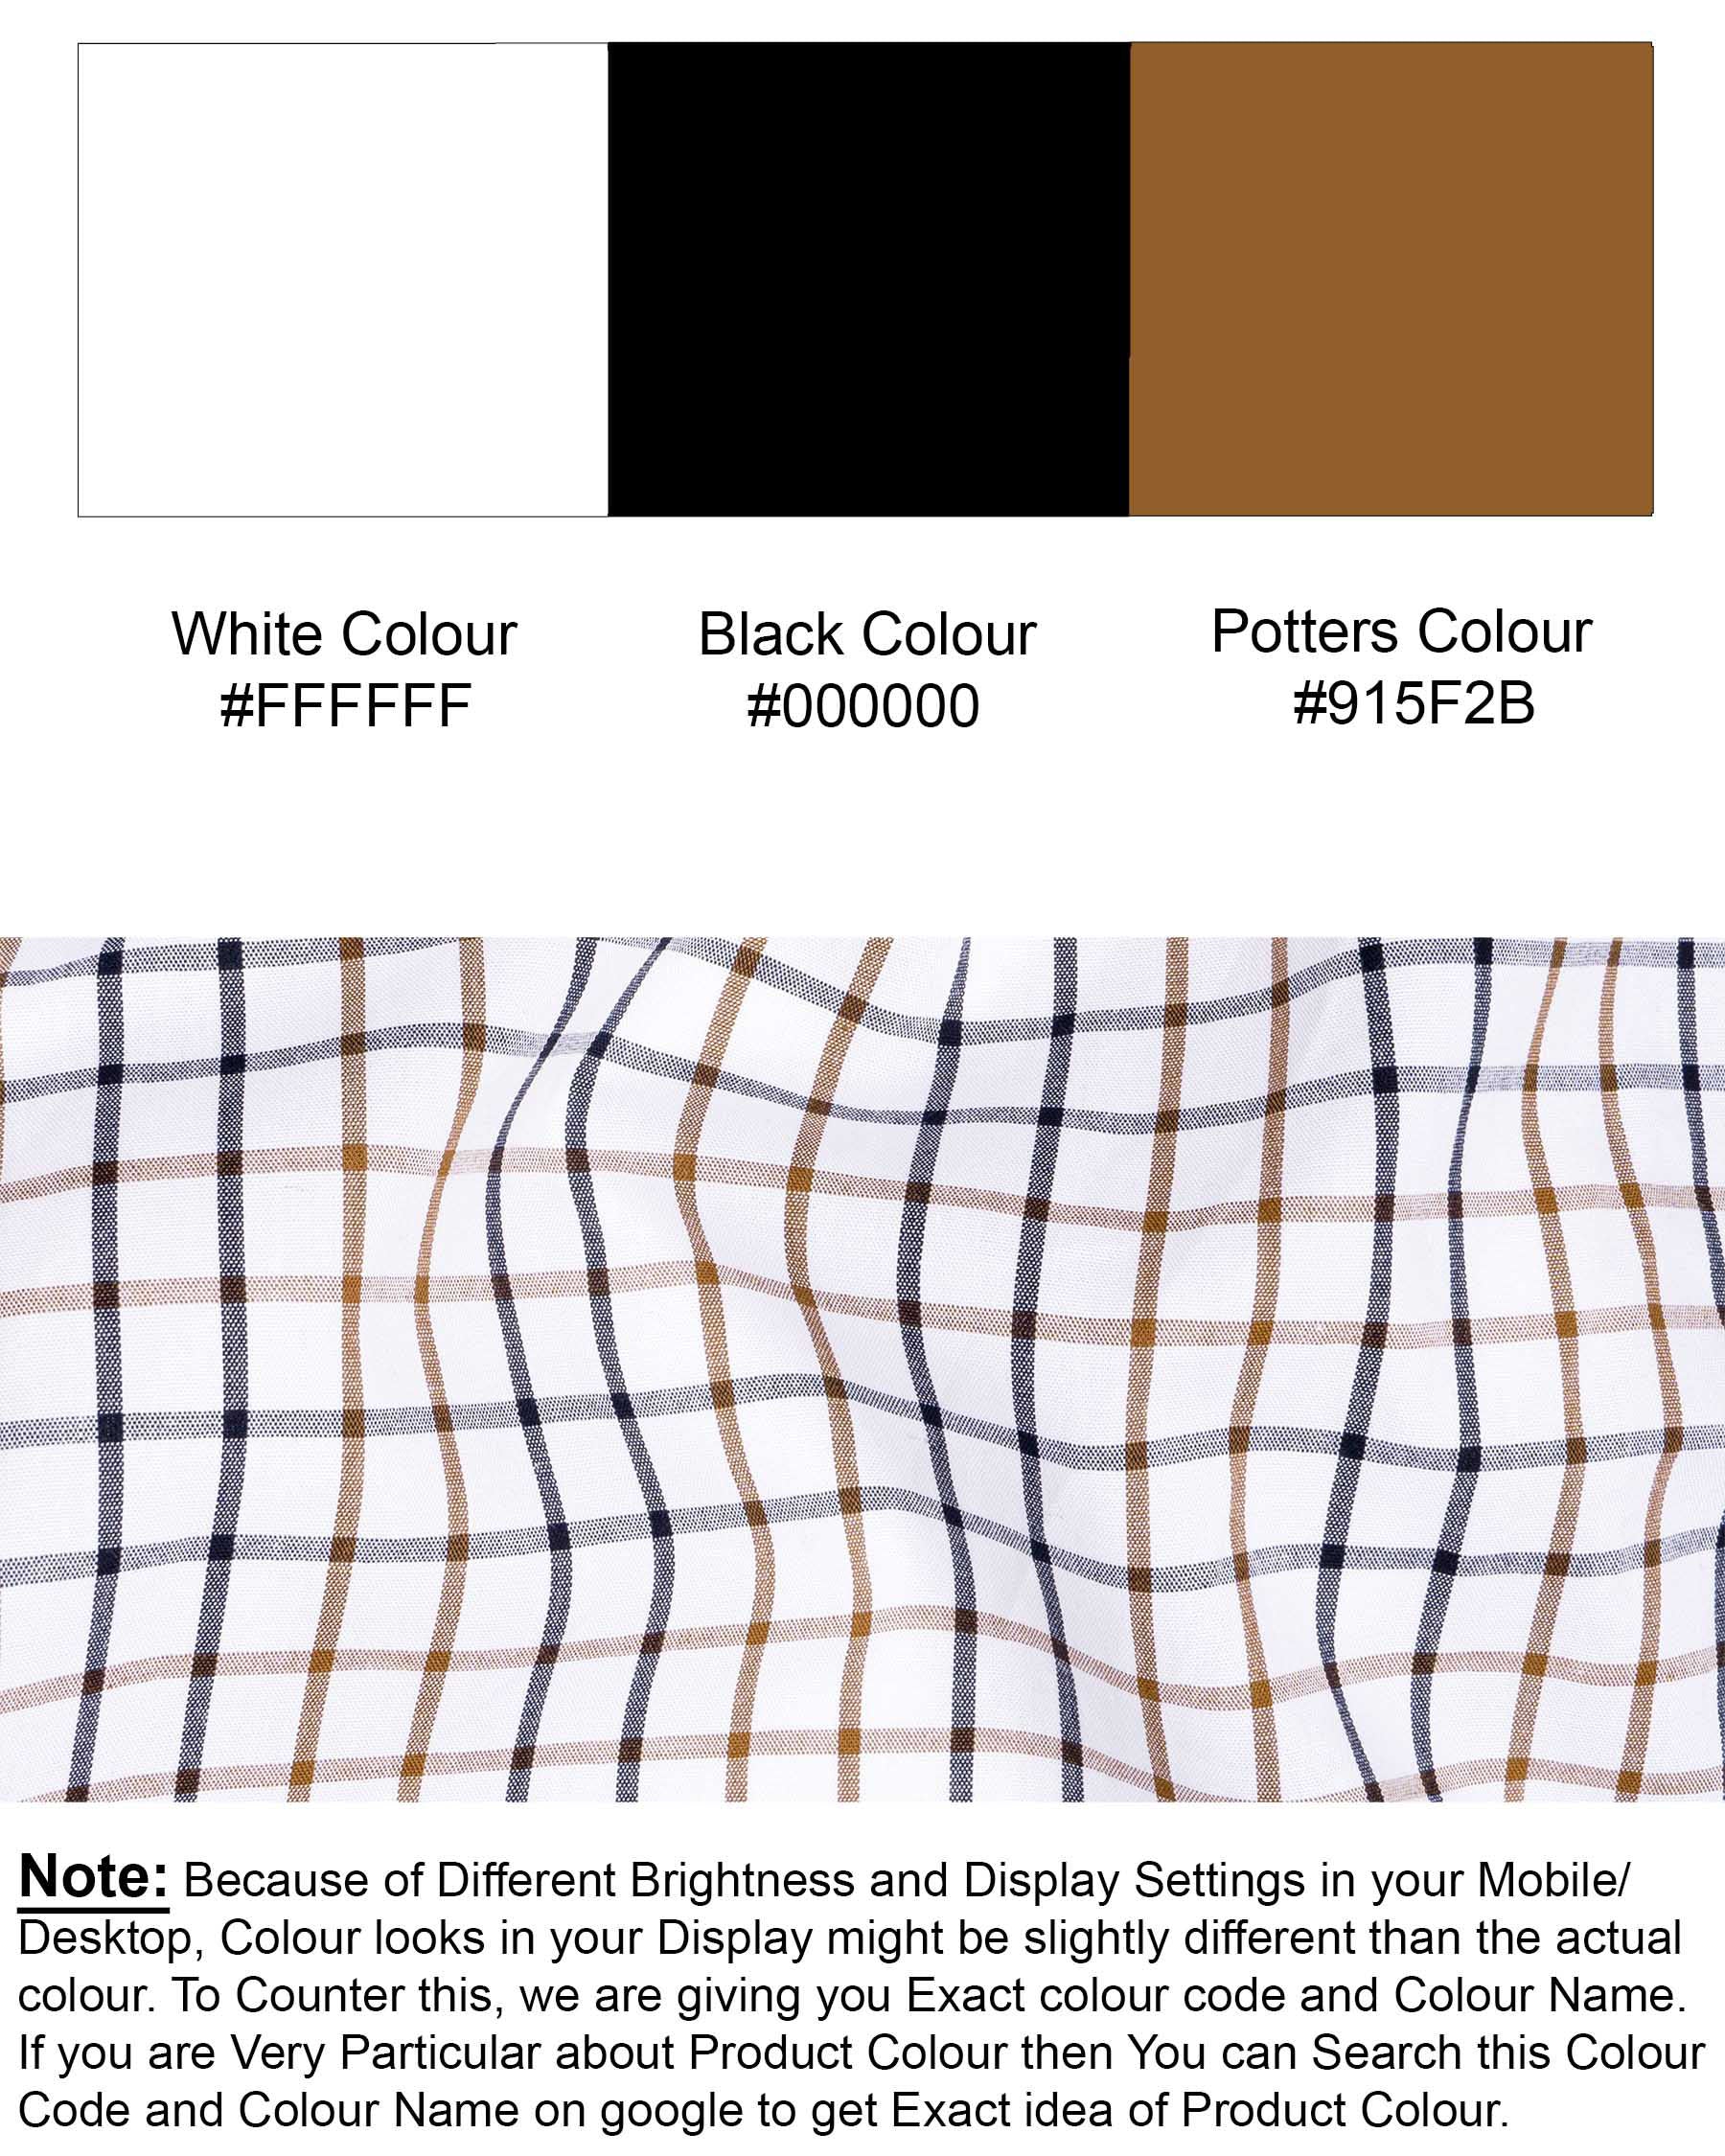 Bright White and Potters Brown Checkered Premium Cotton Shirt 6896-38,6896-38,6896-39,6896-39,6896-40,6896-40,6896-42,6896-42,6896-44,6896-44,6896-46,6896-46,6896-48,6896-48,6896-50,6896-50,6896-52,6896-52